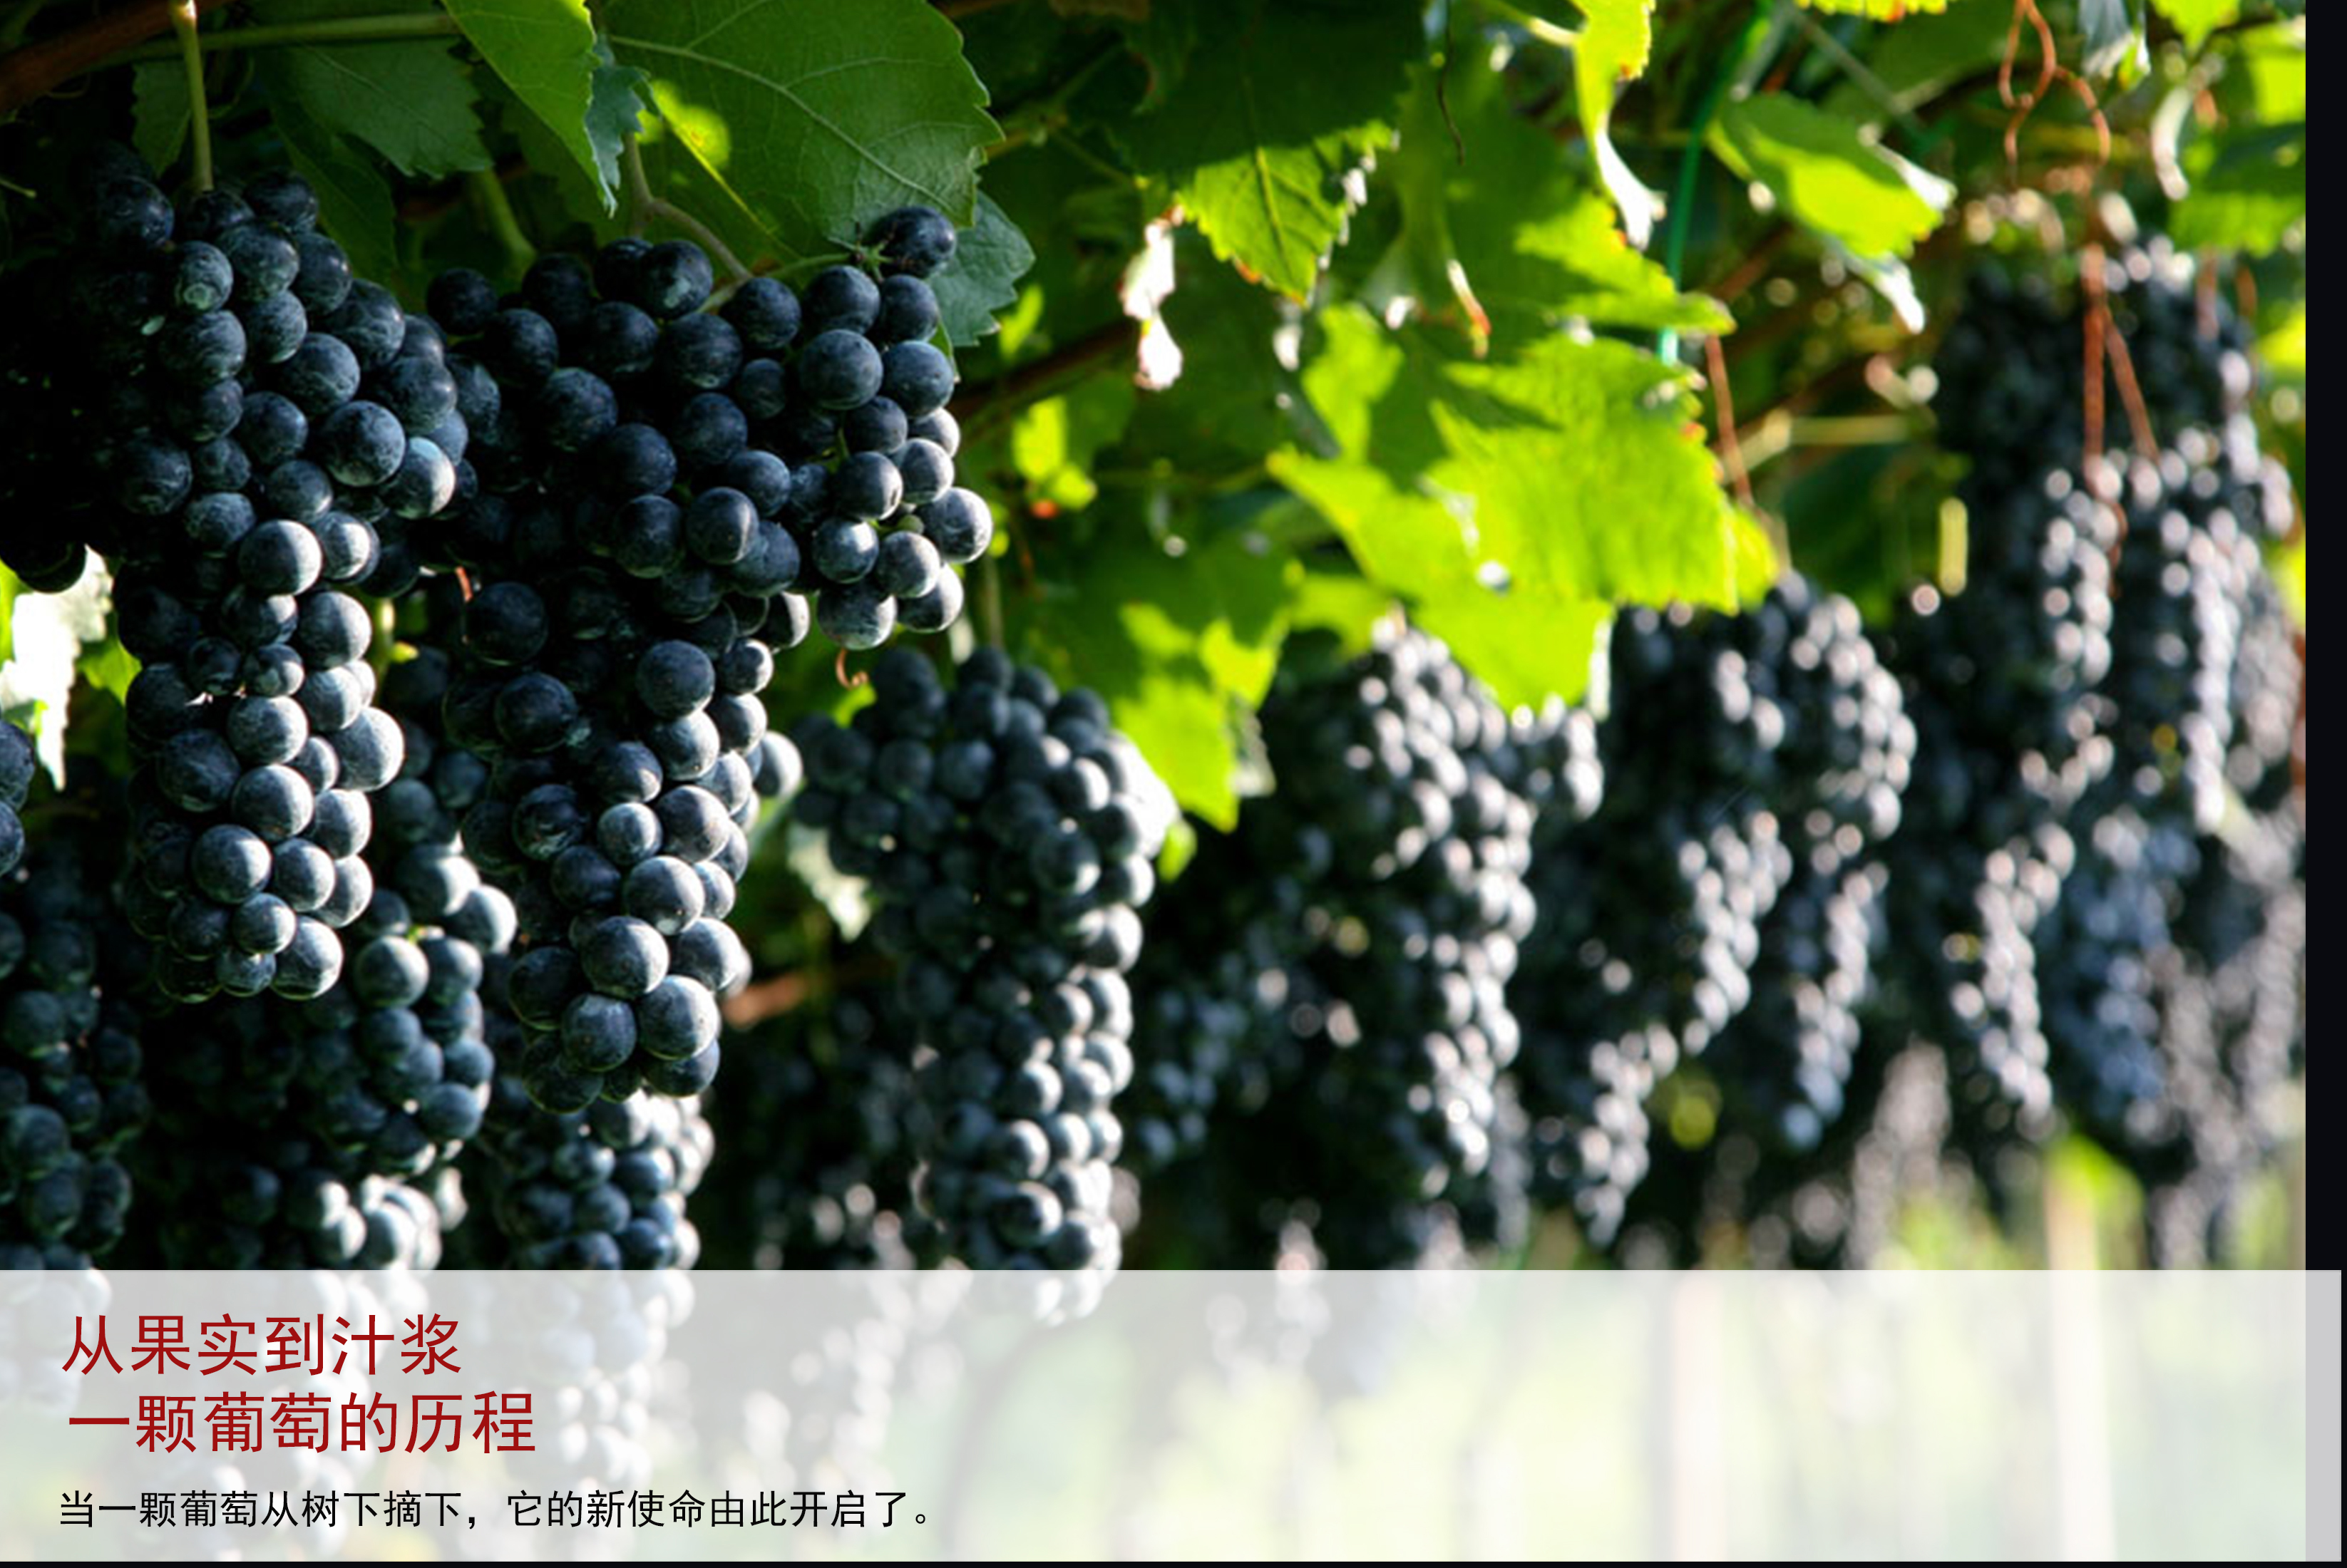 Dynasty王朝一星国产干红葡萄酒(图9)